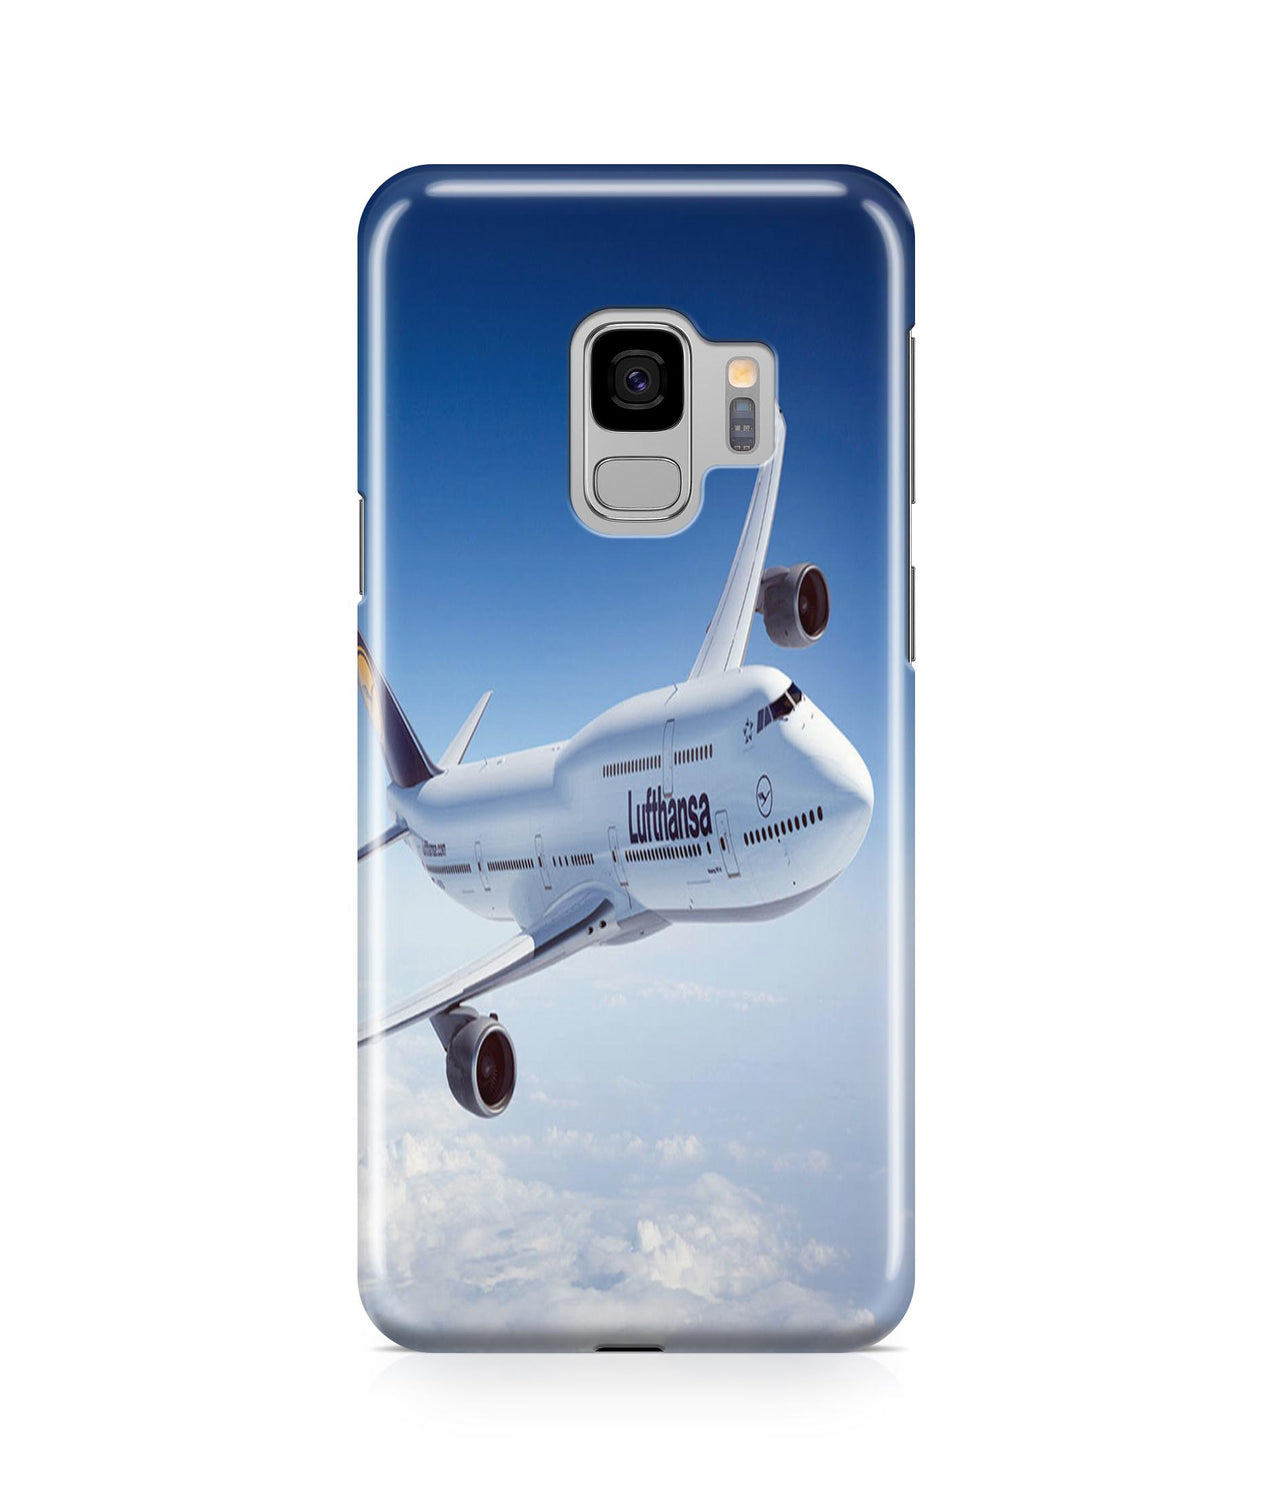 Cruising Lufthansa's Boeing 747 Printed Samsung J Cases